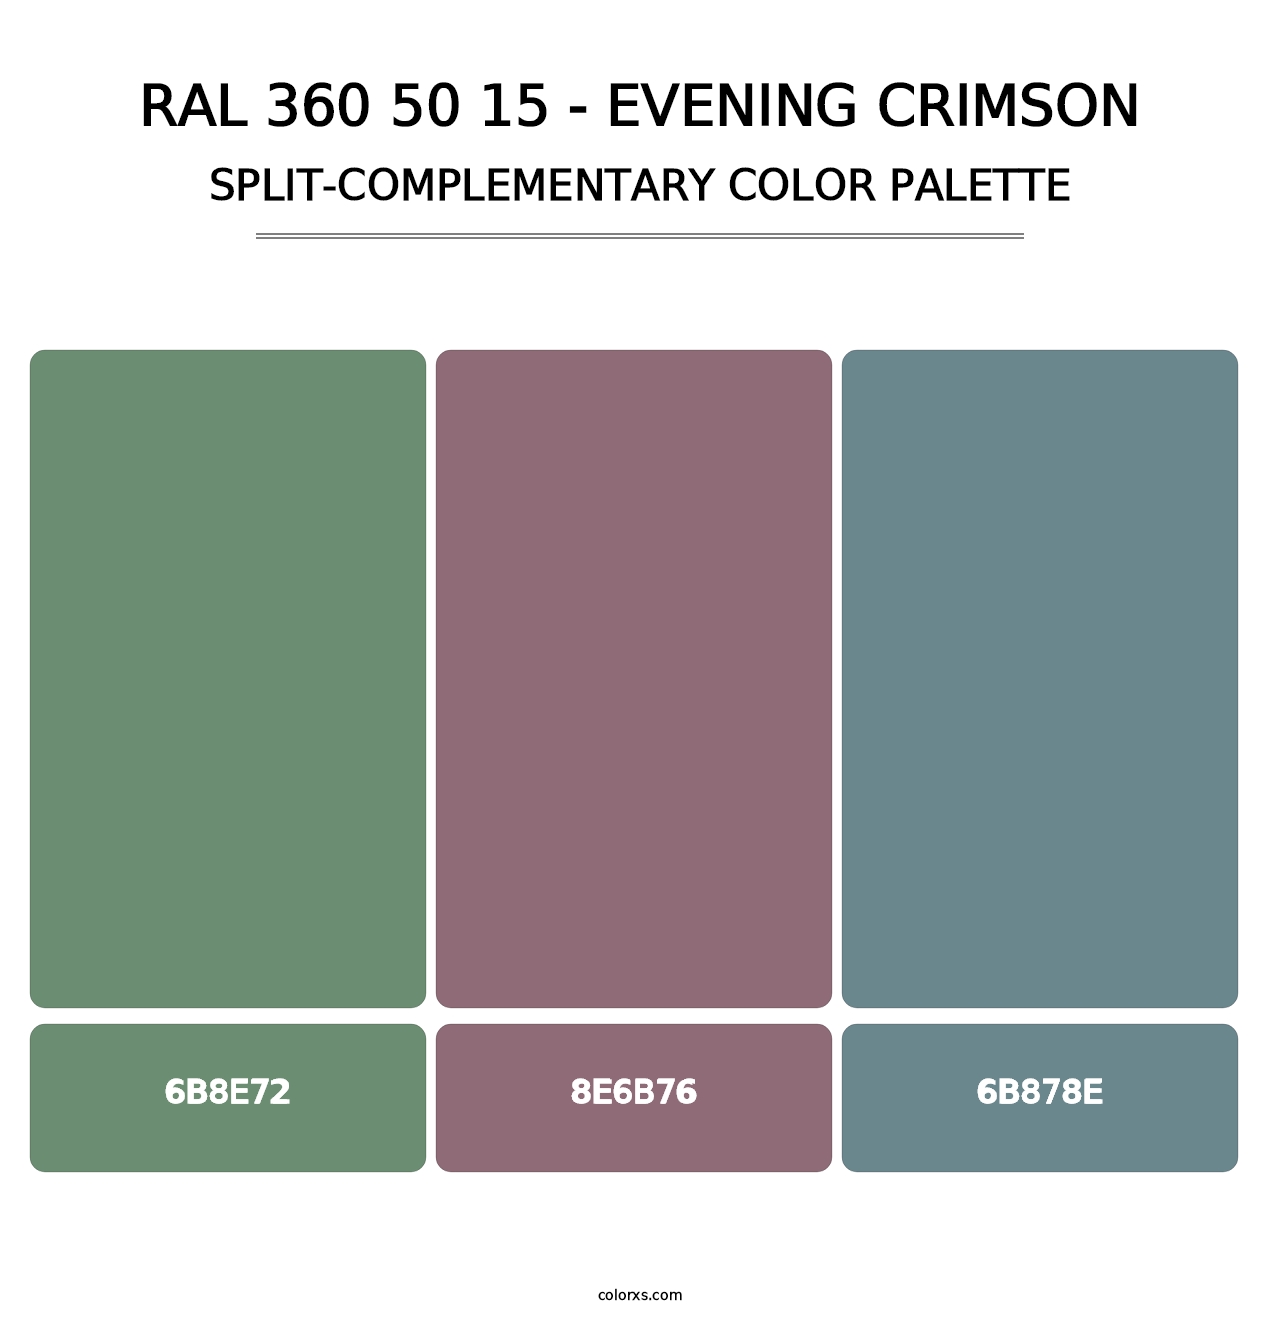 RAL 360 50 15 - Evening Crimson - Split-Complementary Color Palette